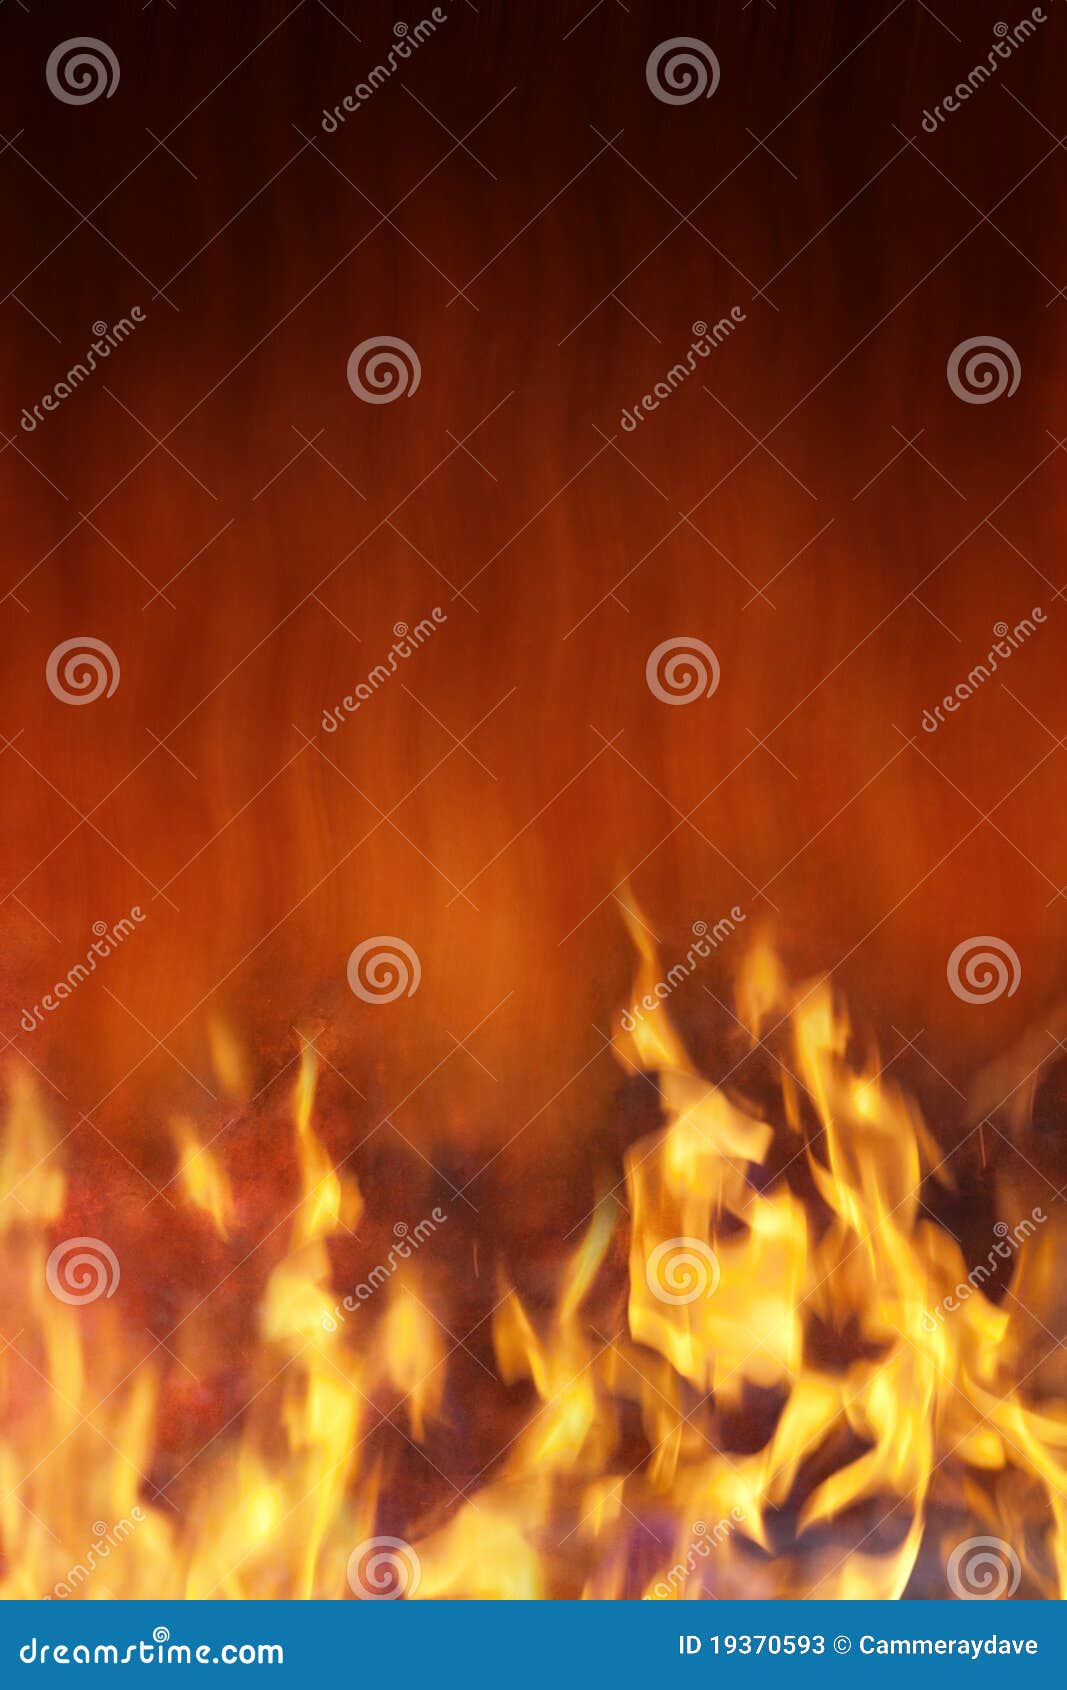 fire flames heat background